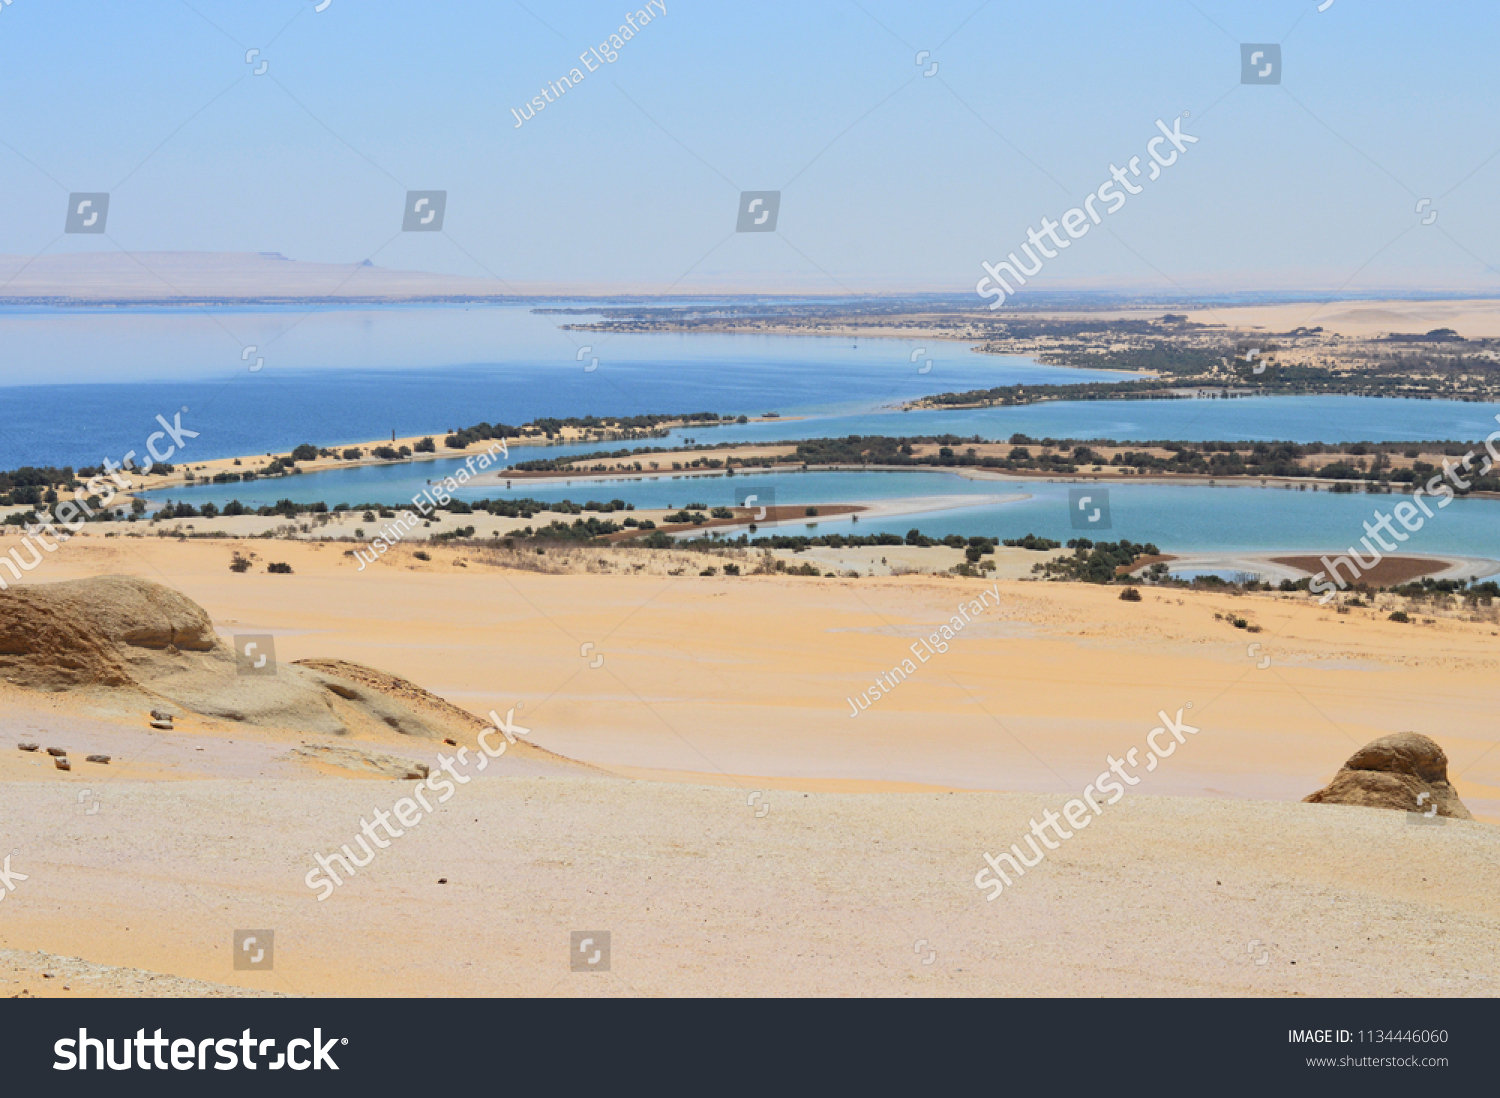 Beautiful surreal oasis in a sandy desert, Fayoum oasis in Sahara desert, Egypt, Africa #1134446060